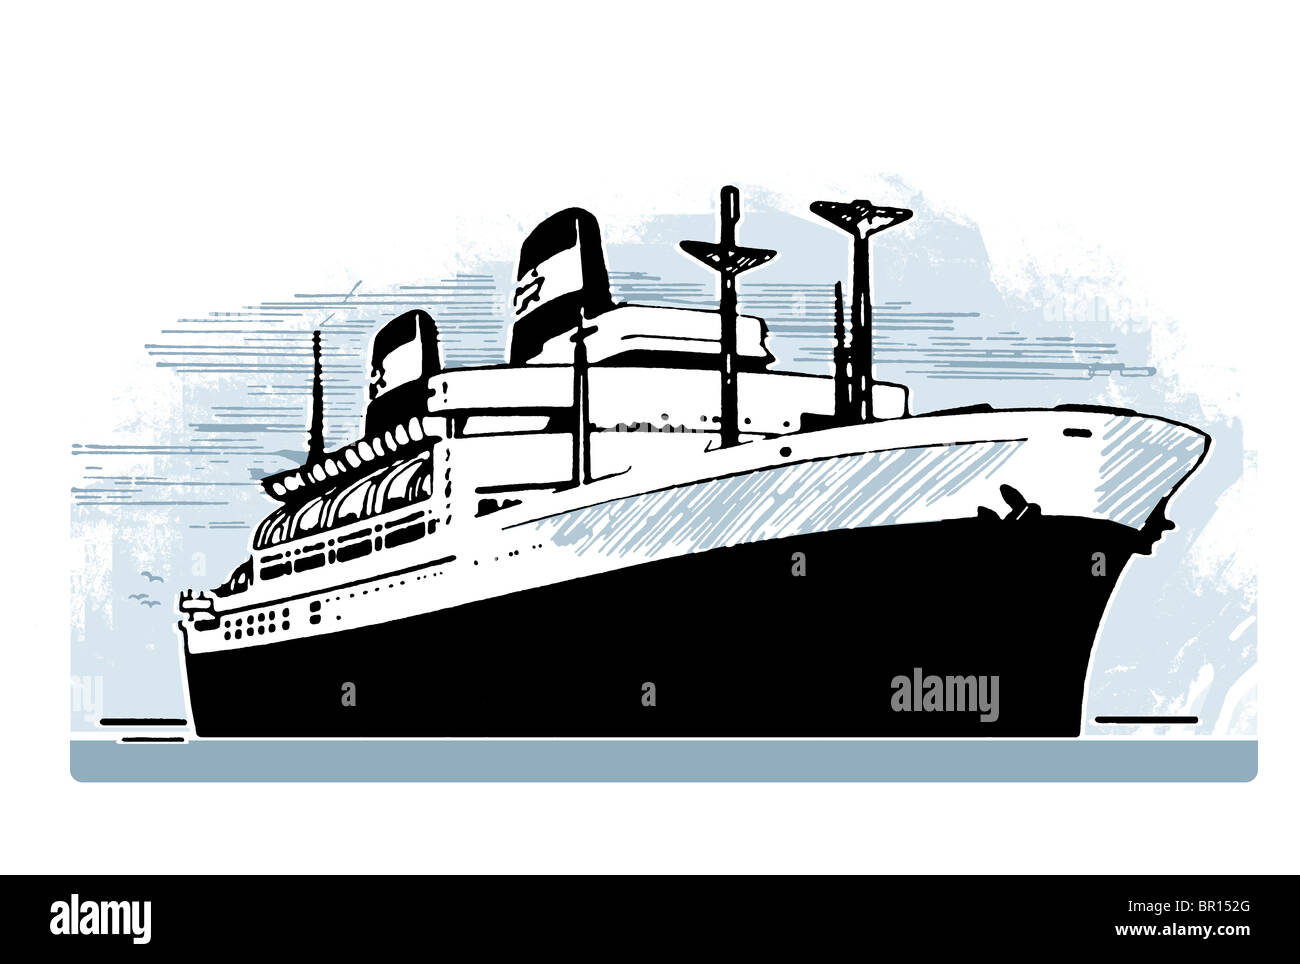 A vintage illustration of a ship Stock Photo